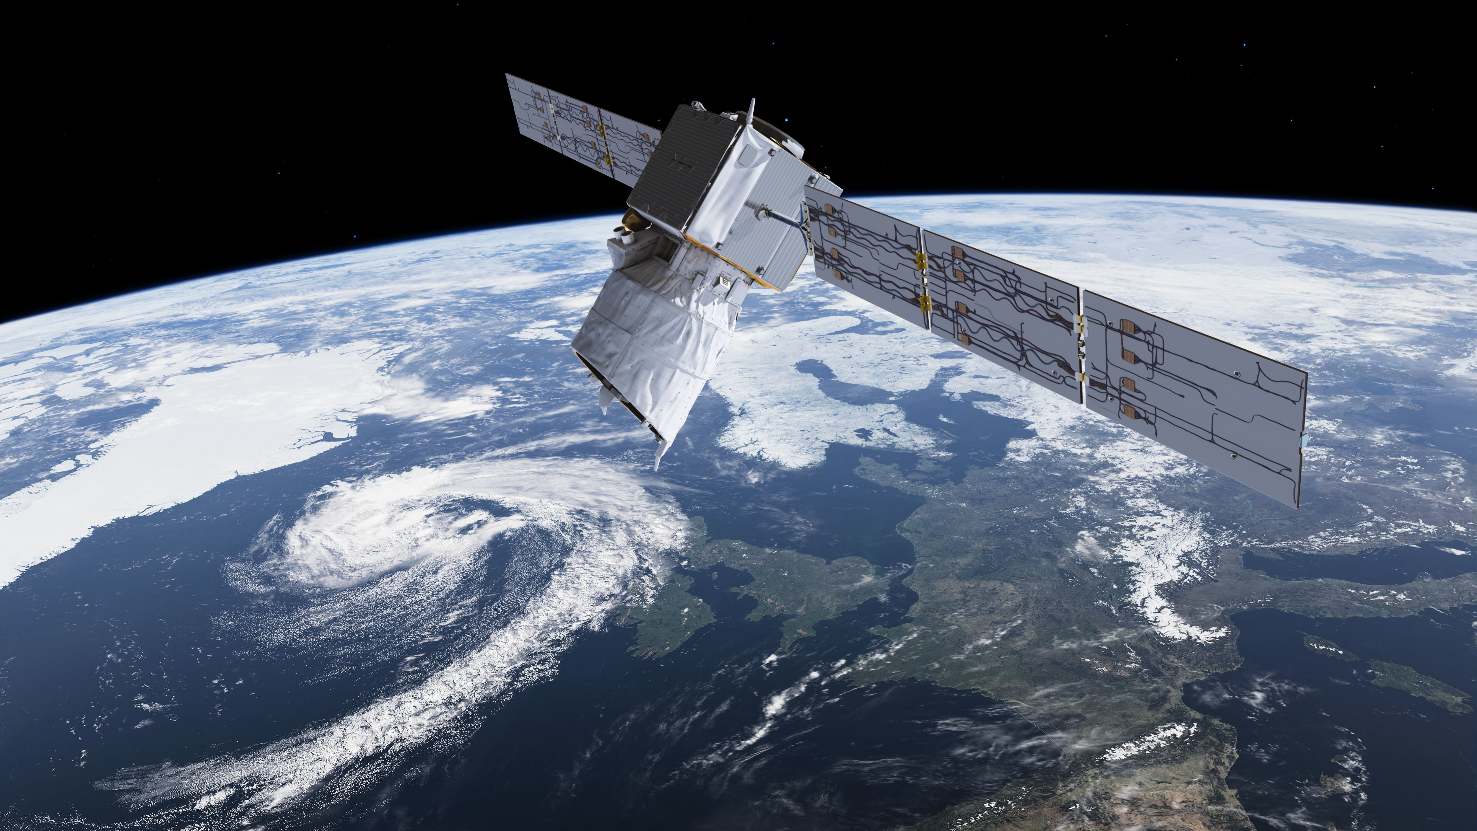 Aeolus wind-sensing satellite completes testing